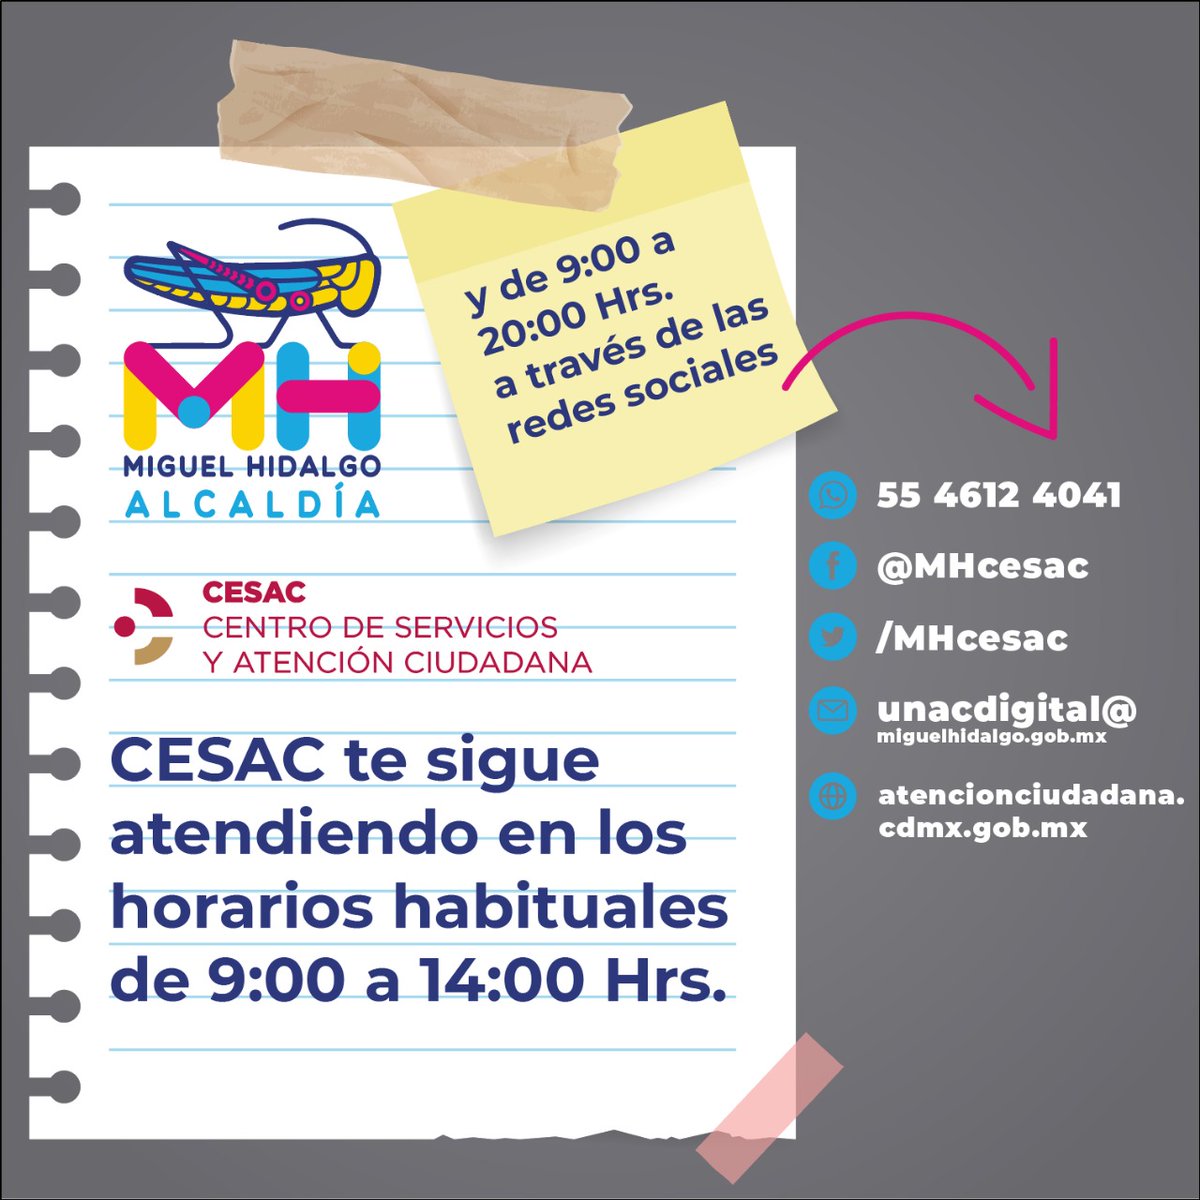 MH CESAC (@MHcesac) on Twitter photo 2022-12-21 18:44:36